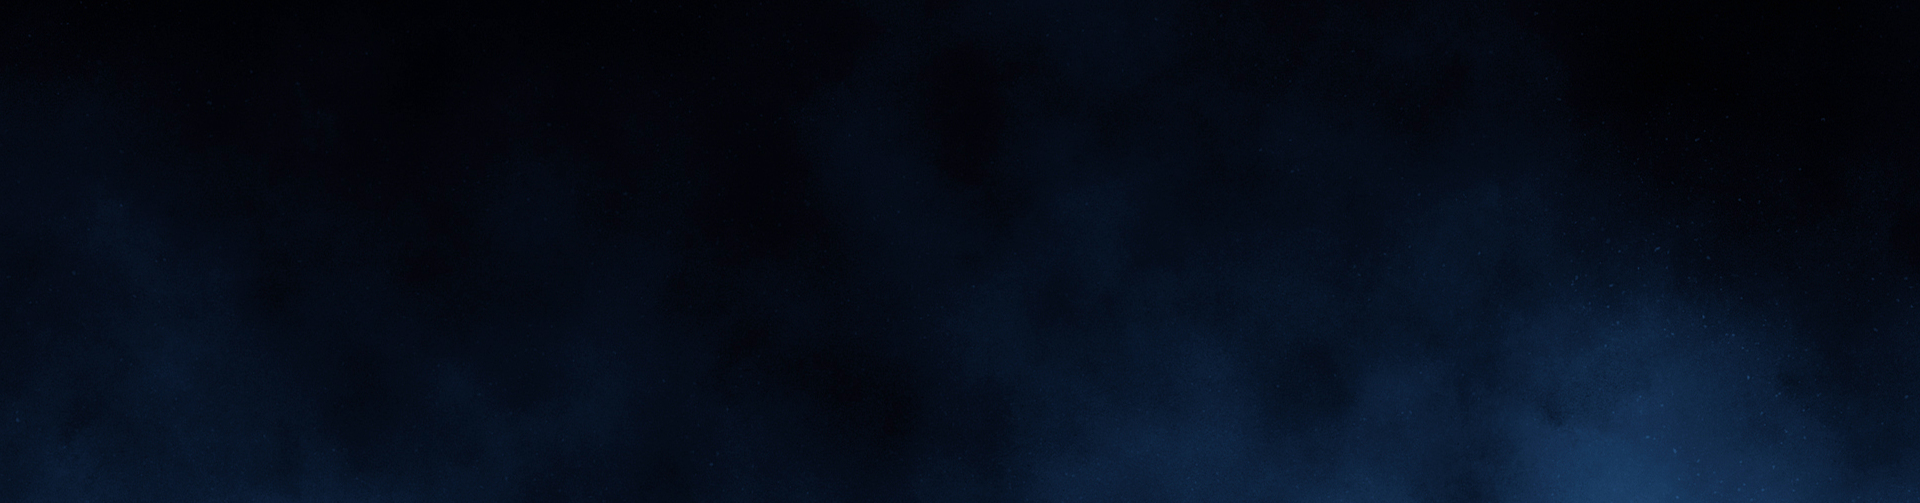 Black and blue smoky background